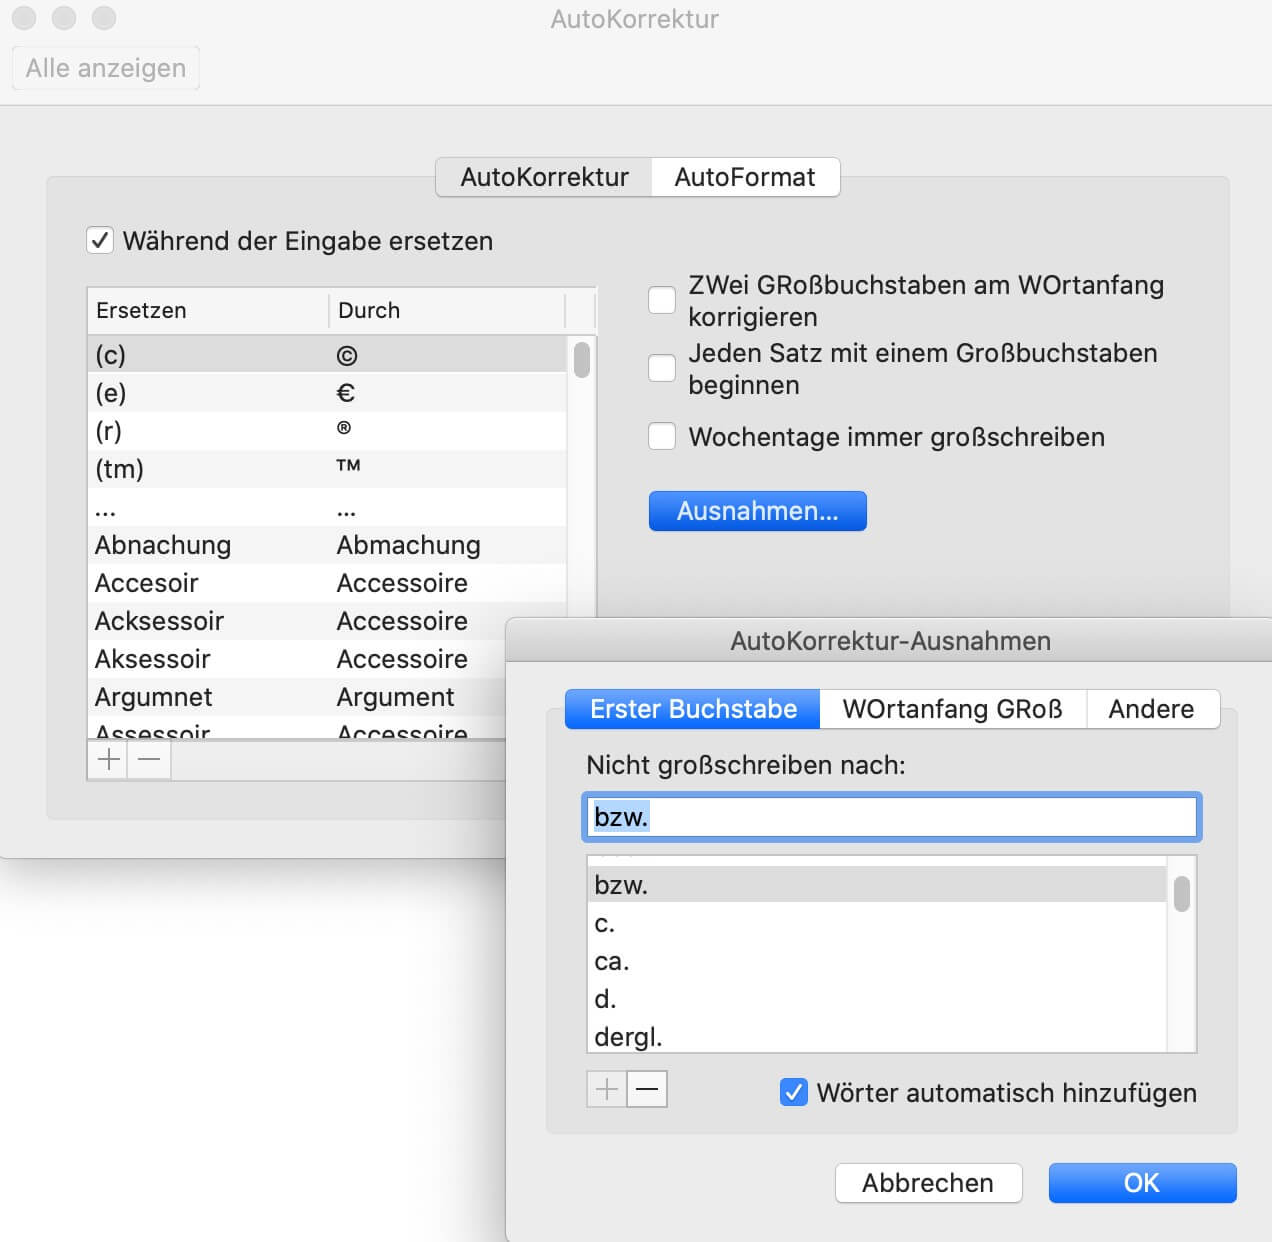 Outlook für Mac: AutoKorrektur Ausnahmen 